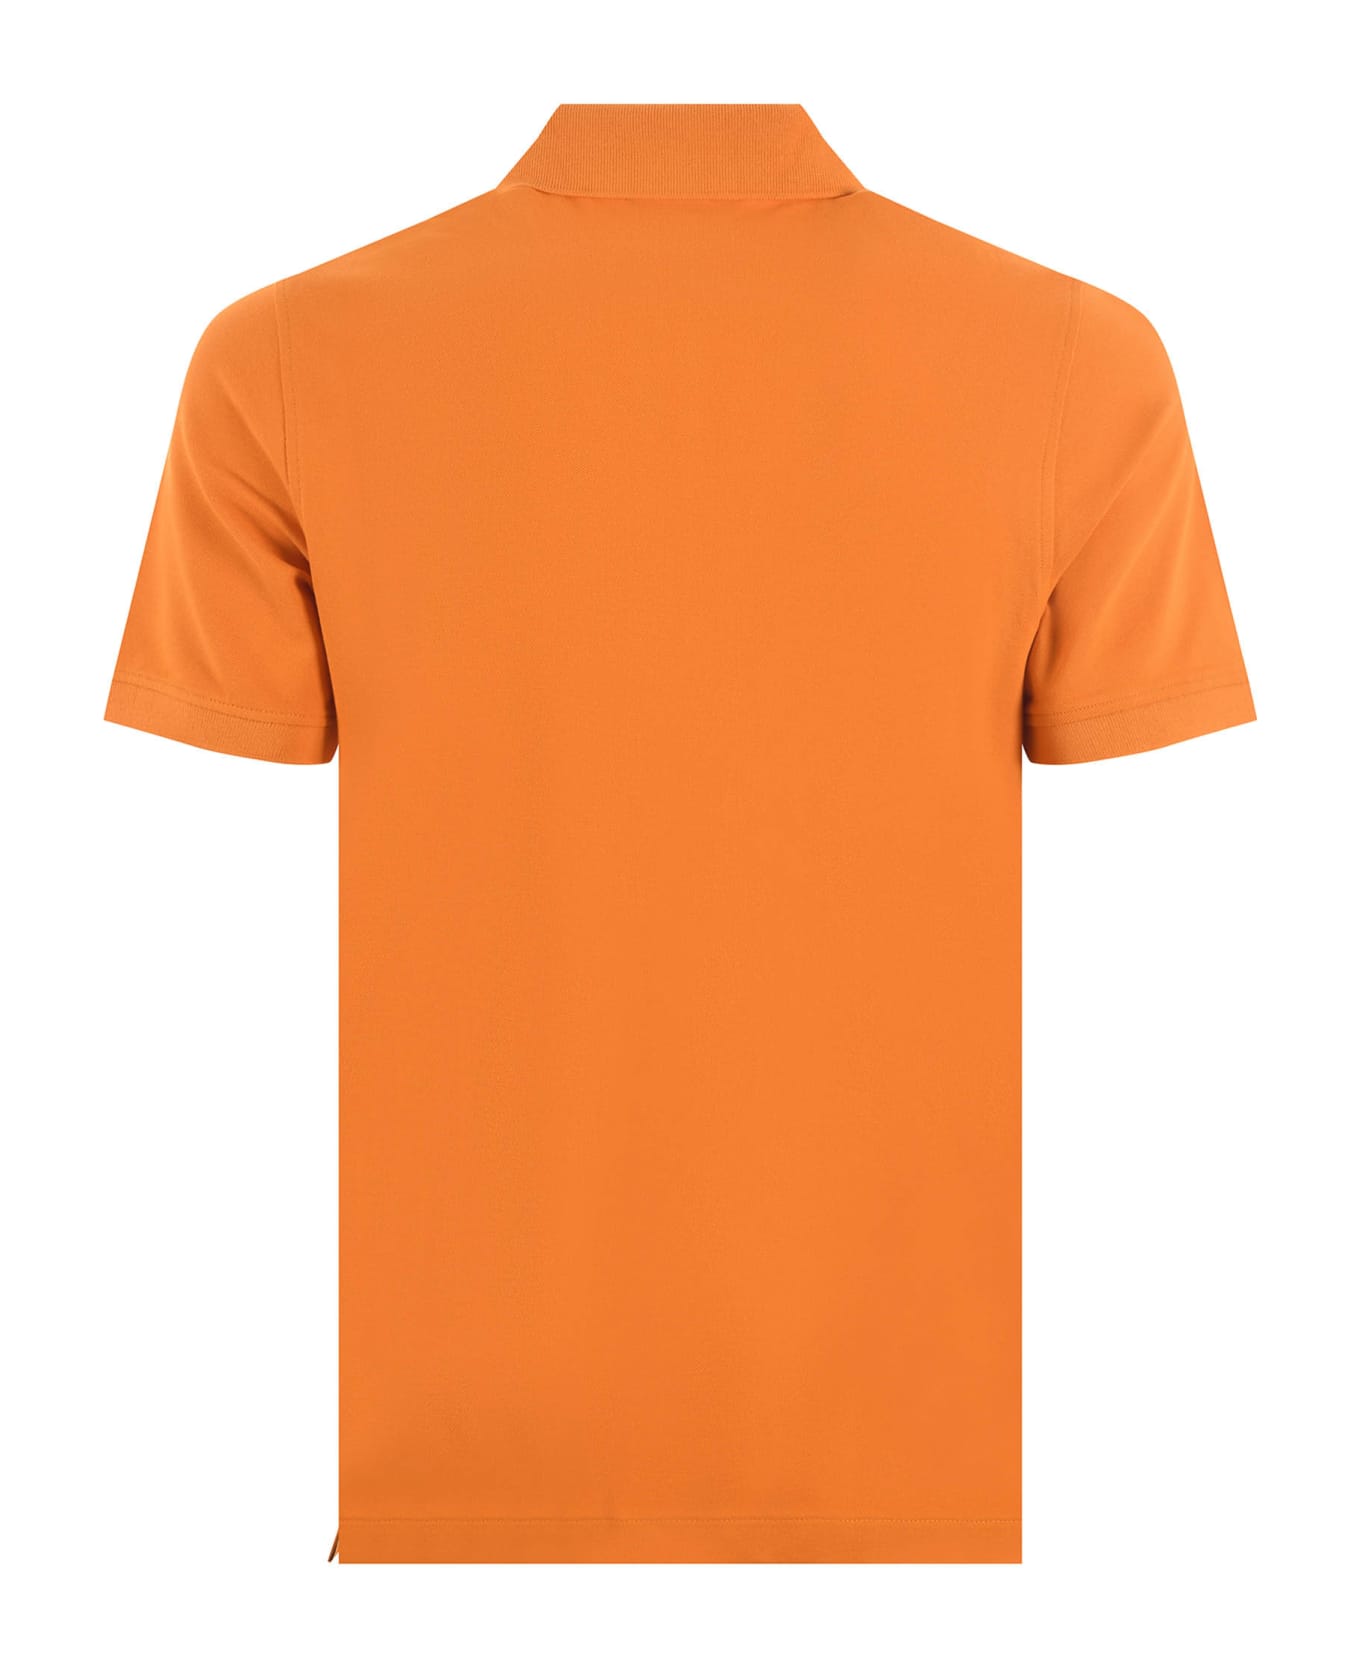 K-Way Polo Shirt - Arancio